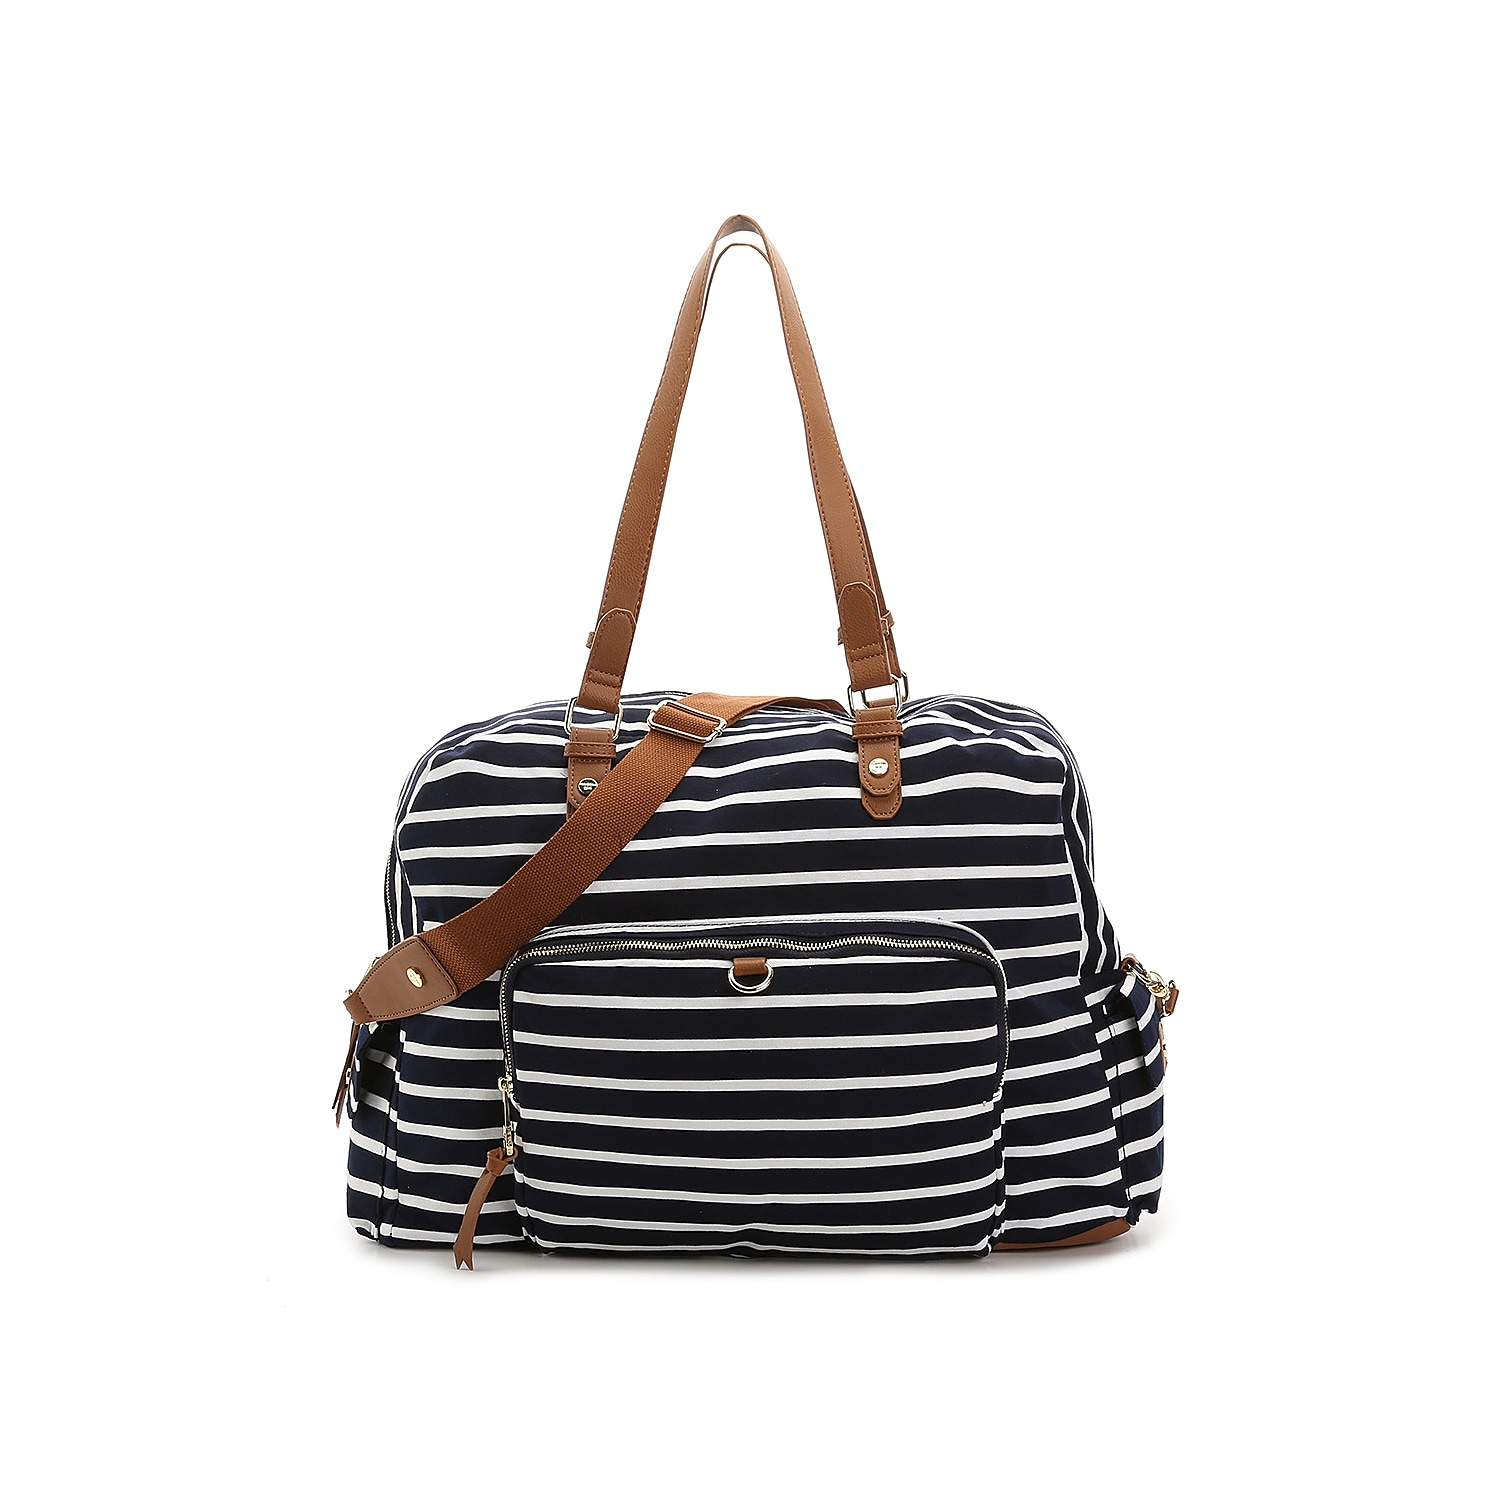 Madden Girl Glory Weekender Bag | Women's | Navy/White Stripes Canvas | Size One Size | Handbags | Weekender Bag